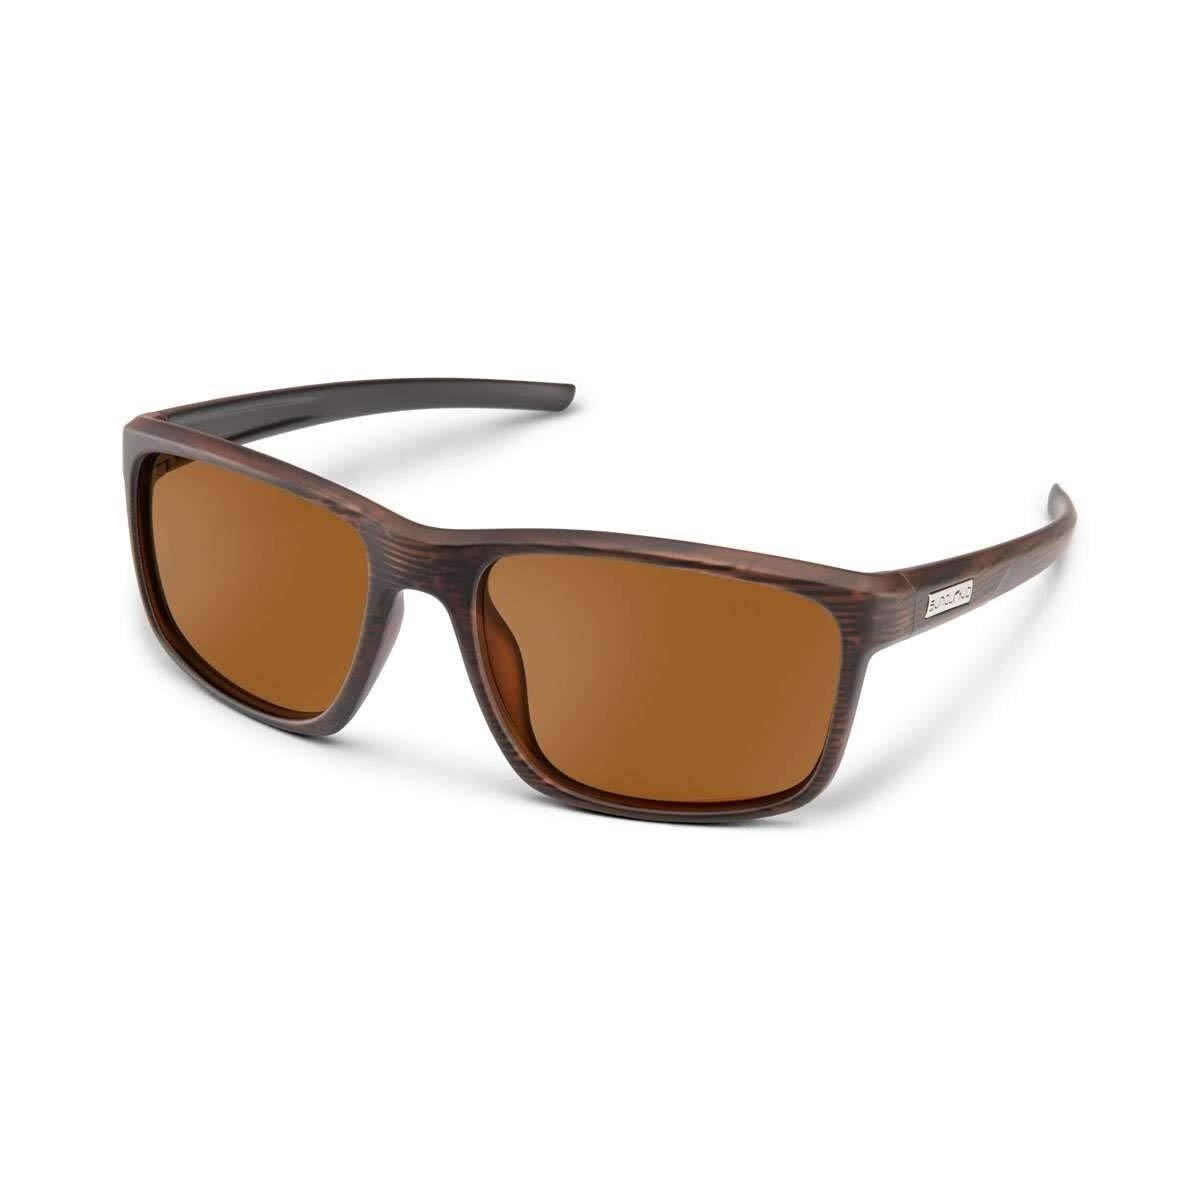 Respek Unisex Burnished Brown Frame Brown Polarized Lens Square Sunglasses - 20233709Q59Hb Suncloud Nylon